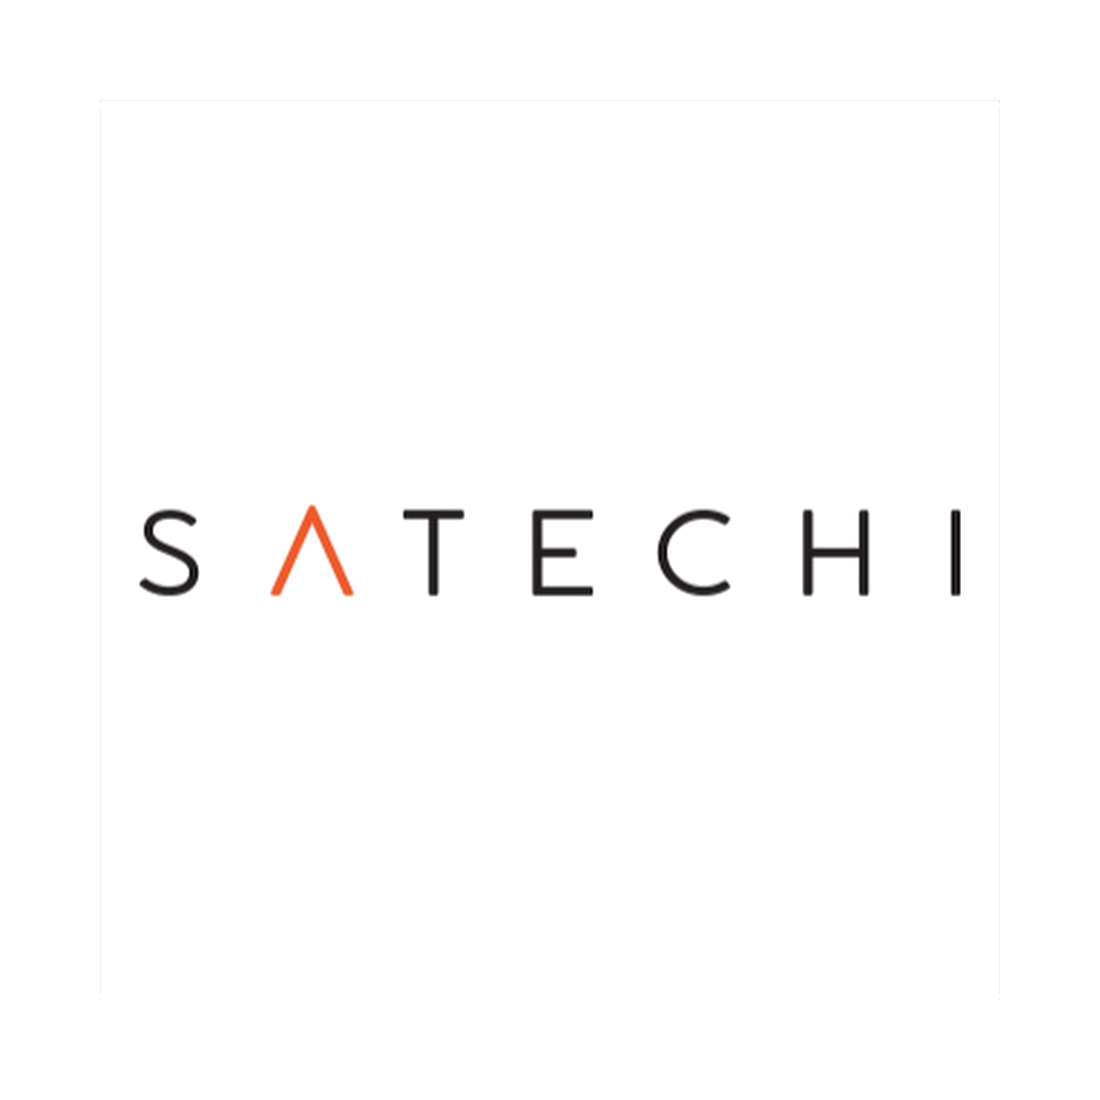 Satechi - Usb-C Multiport MX Adapter Wit